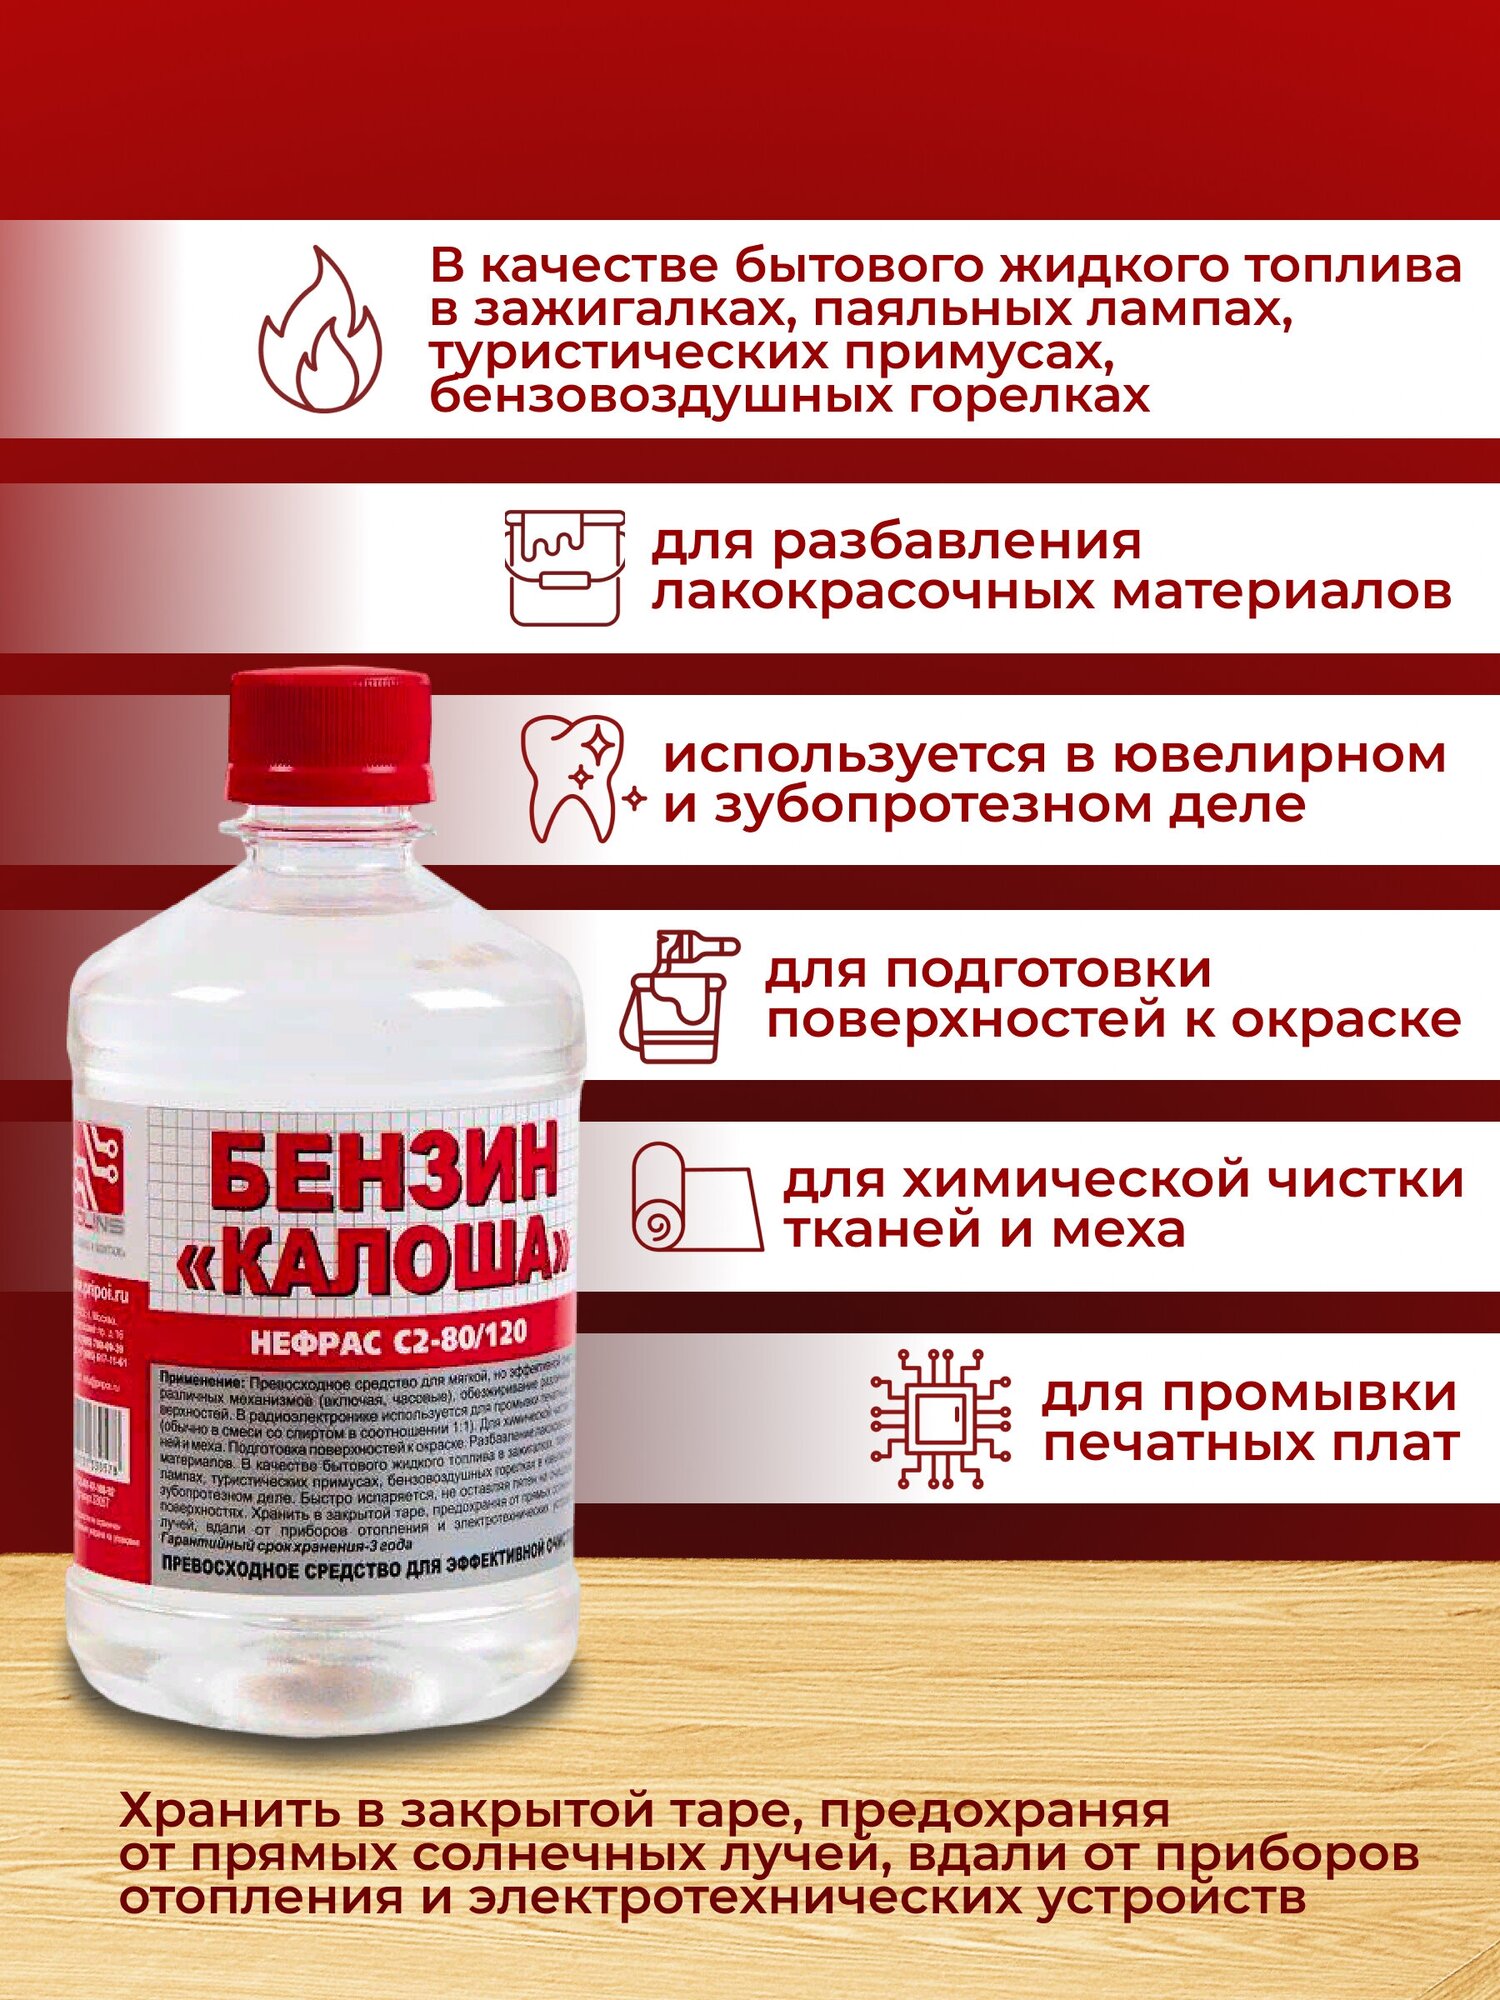 Бензин Калоша, 0,5 л